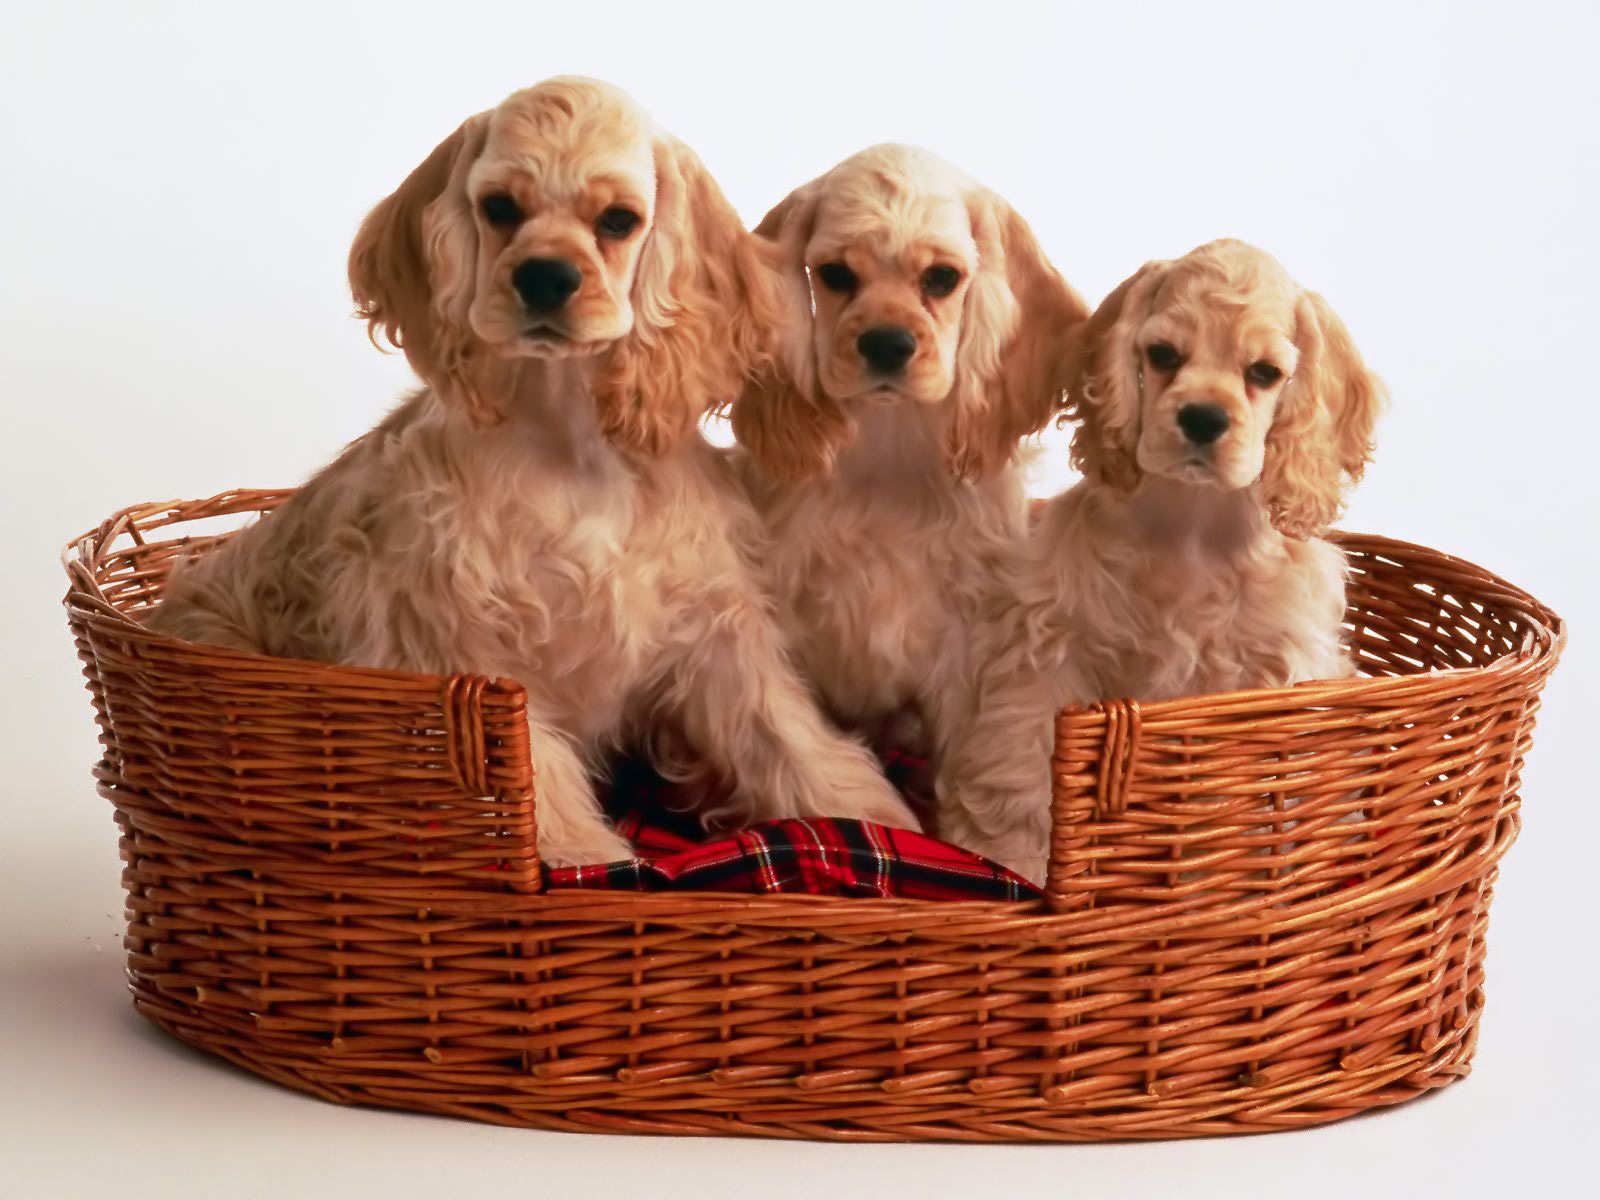 Cocker Spaniel Puppies - Puppies Wallpaper 9726097 - Fanpop